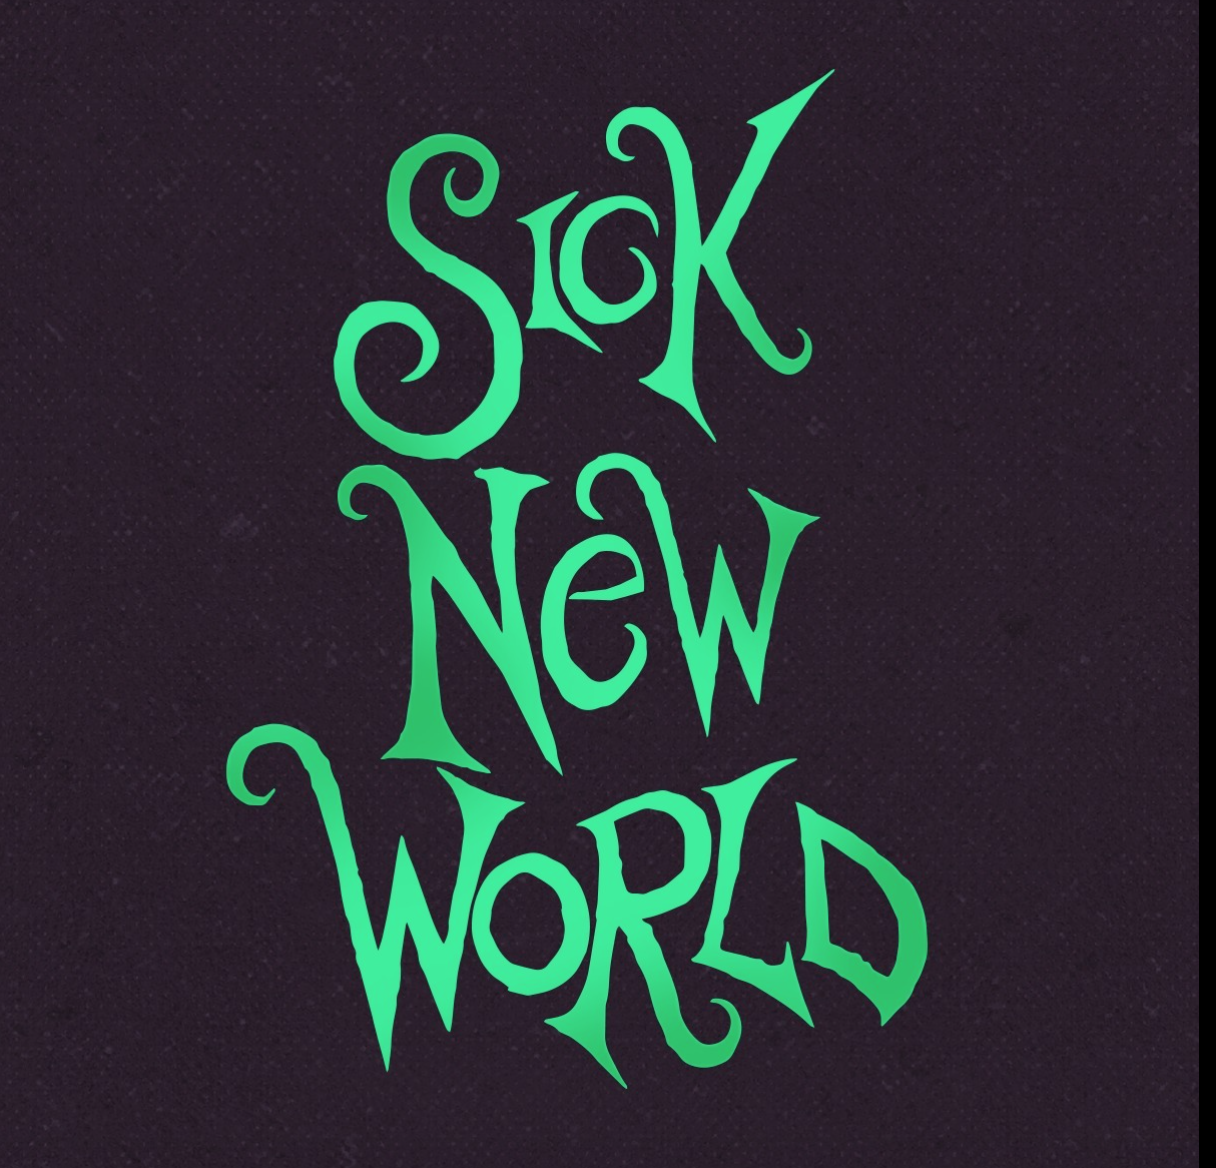 Episode 335: Who’s Tweeting ”Sick Nu World”